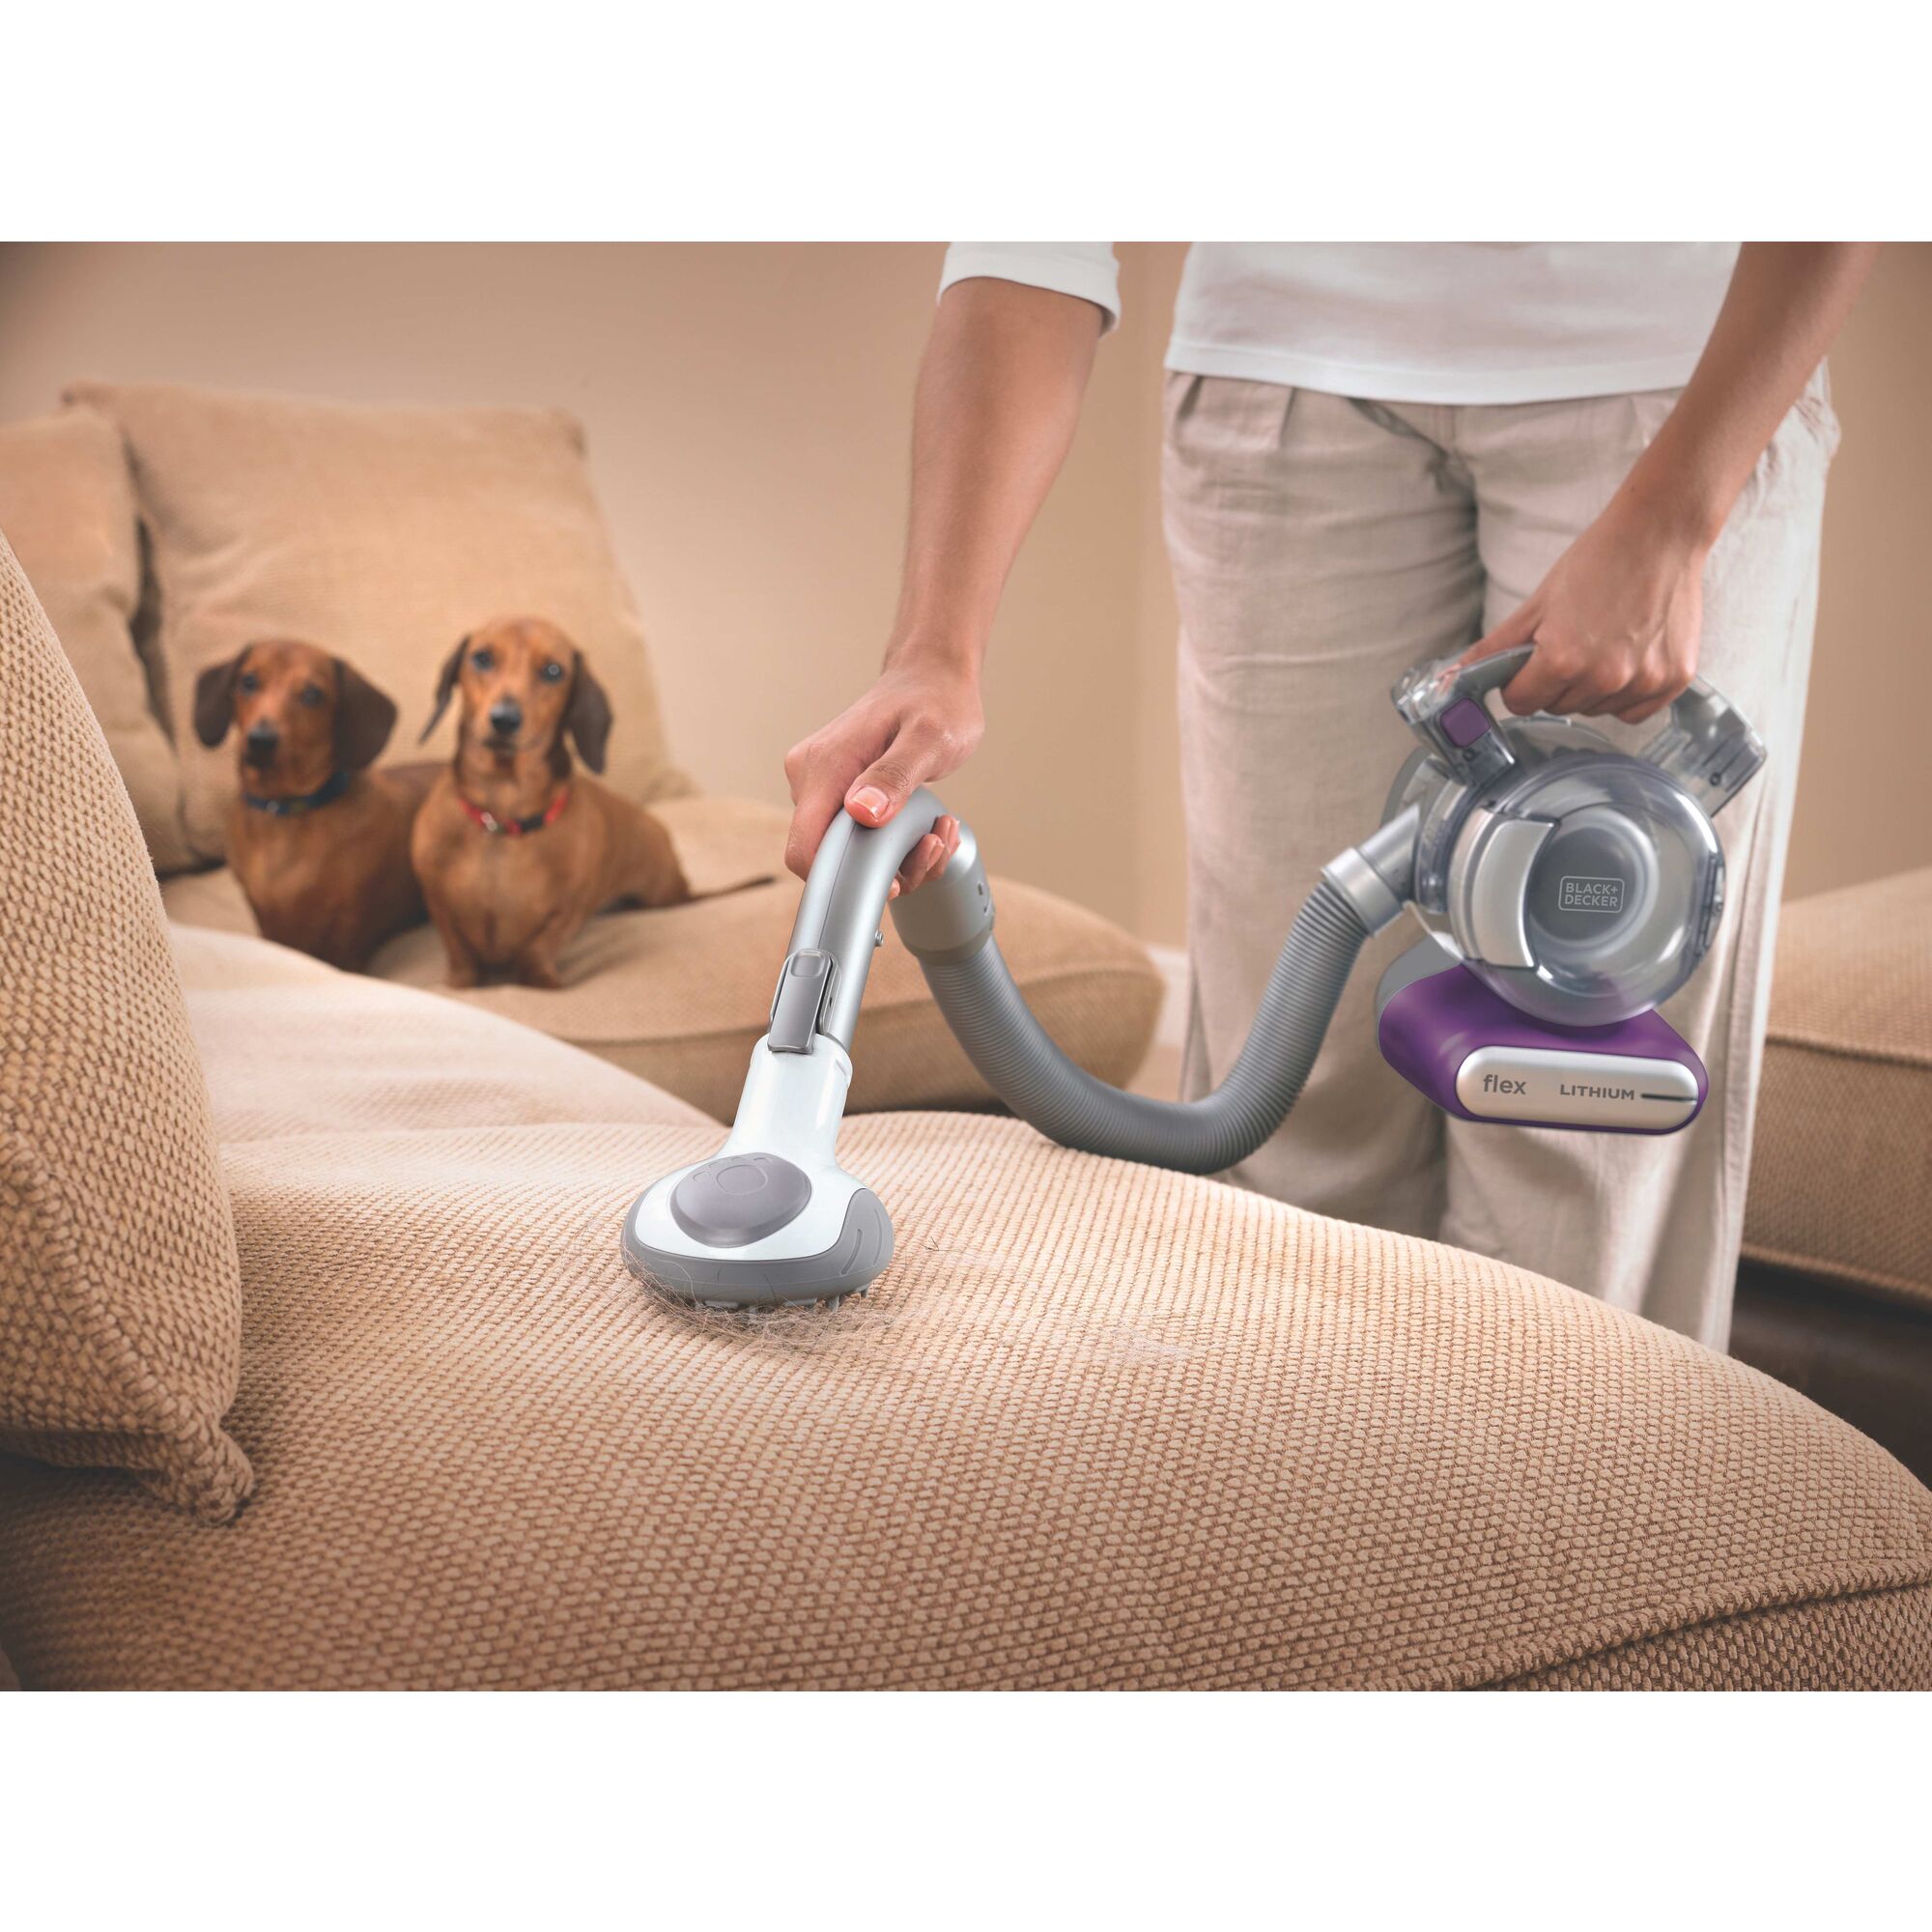 Dustbuster flex cordless hand vacuum cleaning sofa.